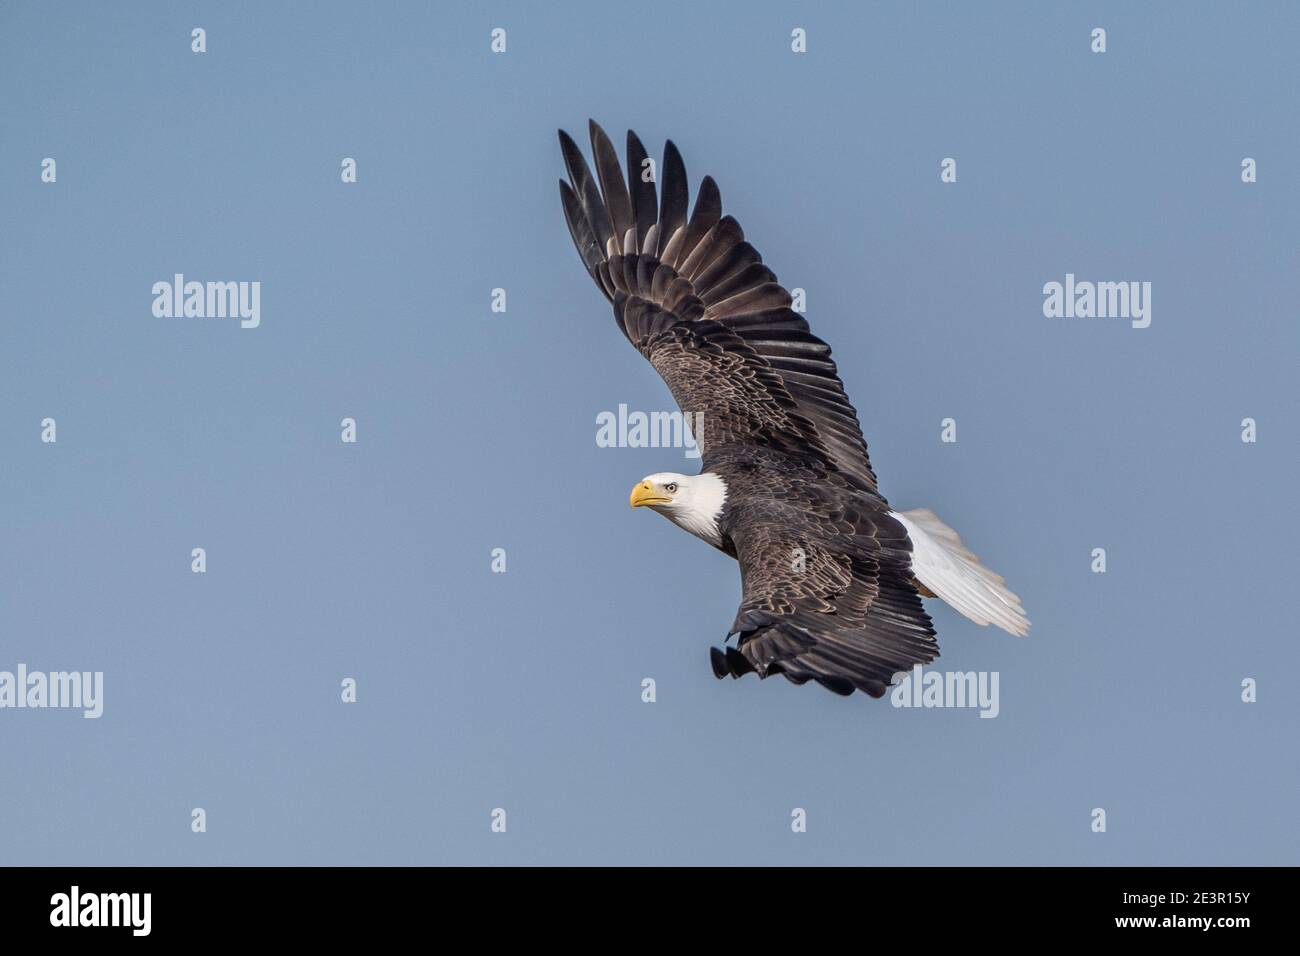 A beautiful adult bald eagle (Haliaeetus leucocephalus) flies against a blue-sky background Stock Photo